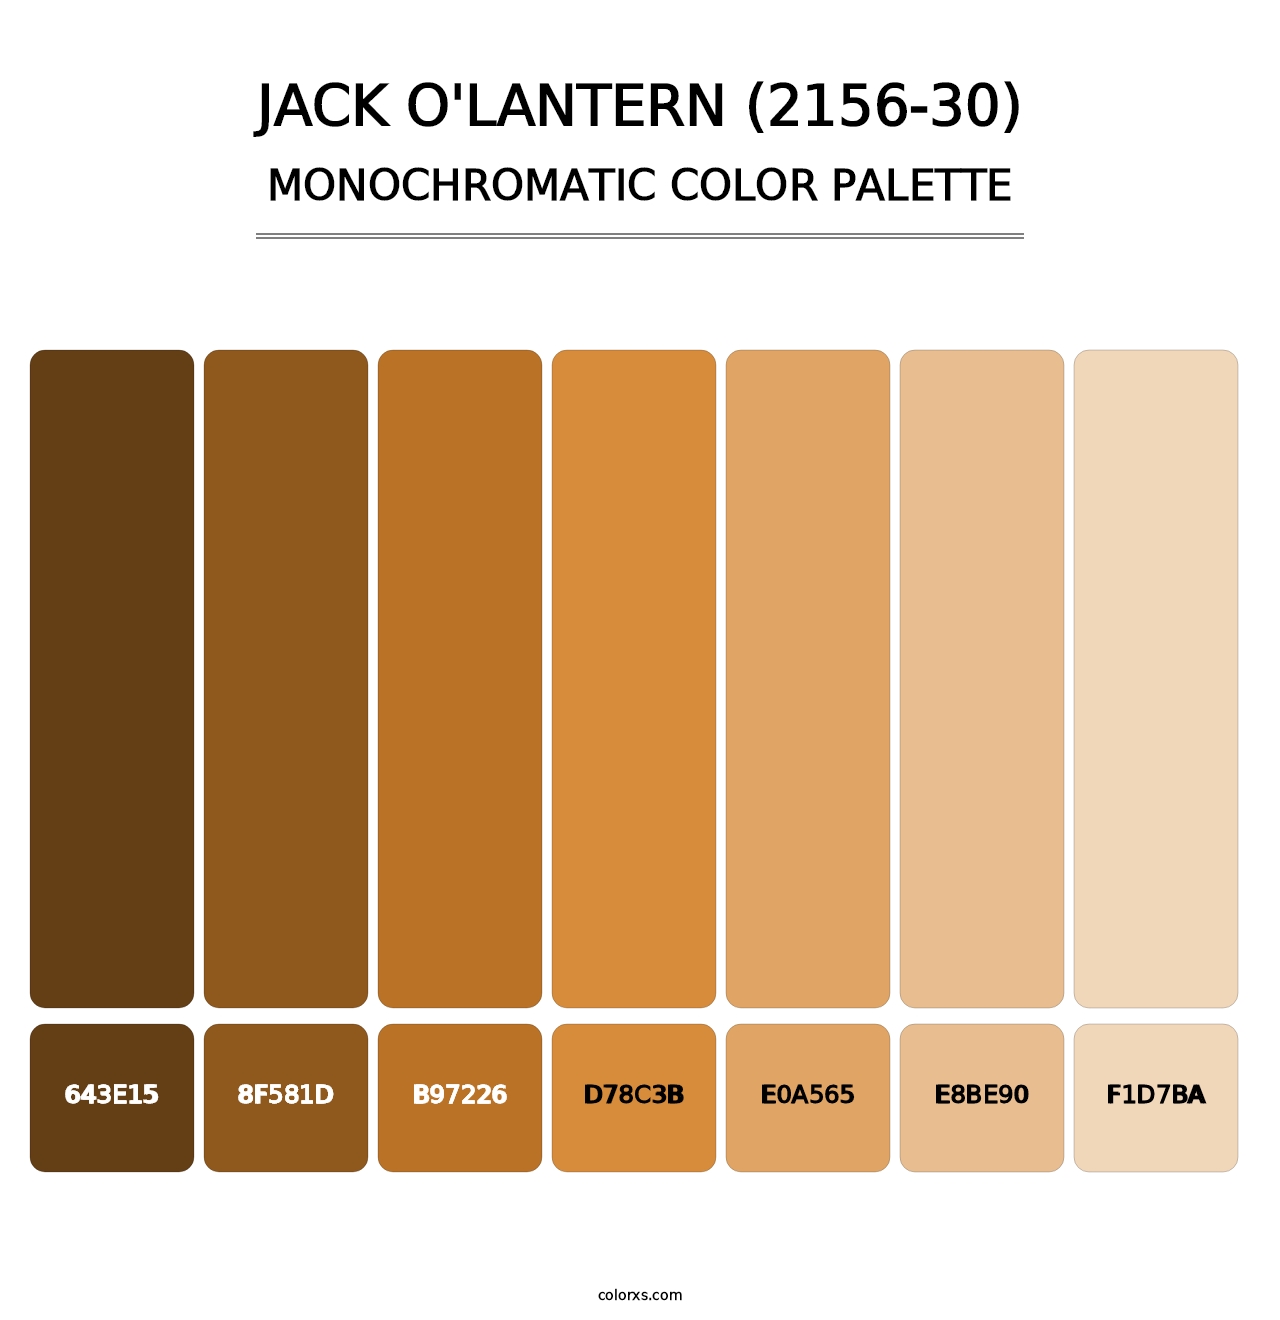 Jack O'Lantern (2156-30) - Monochromatic Color Palette